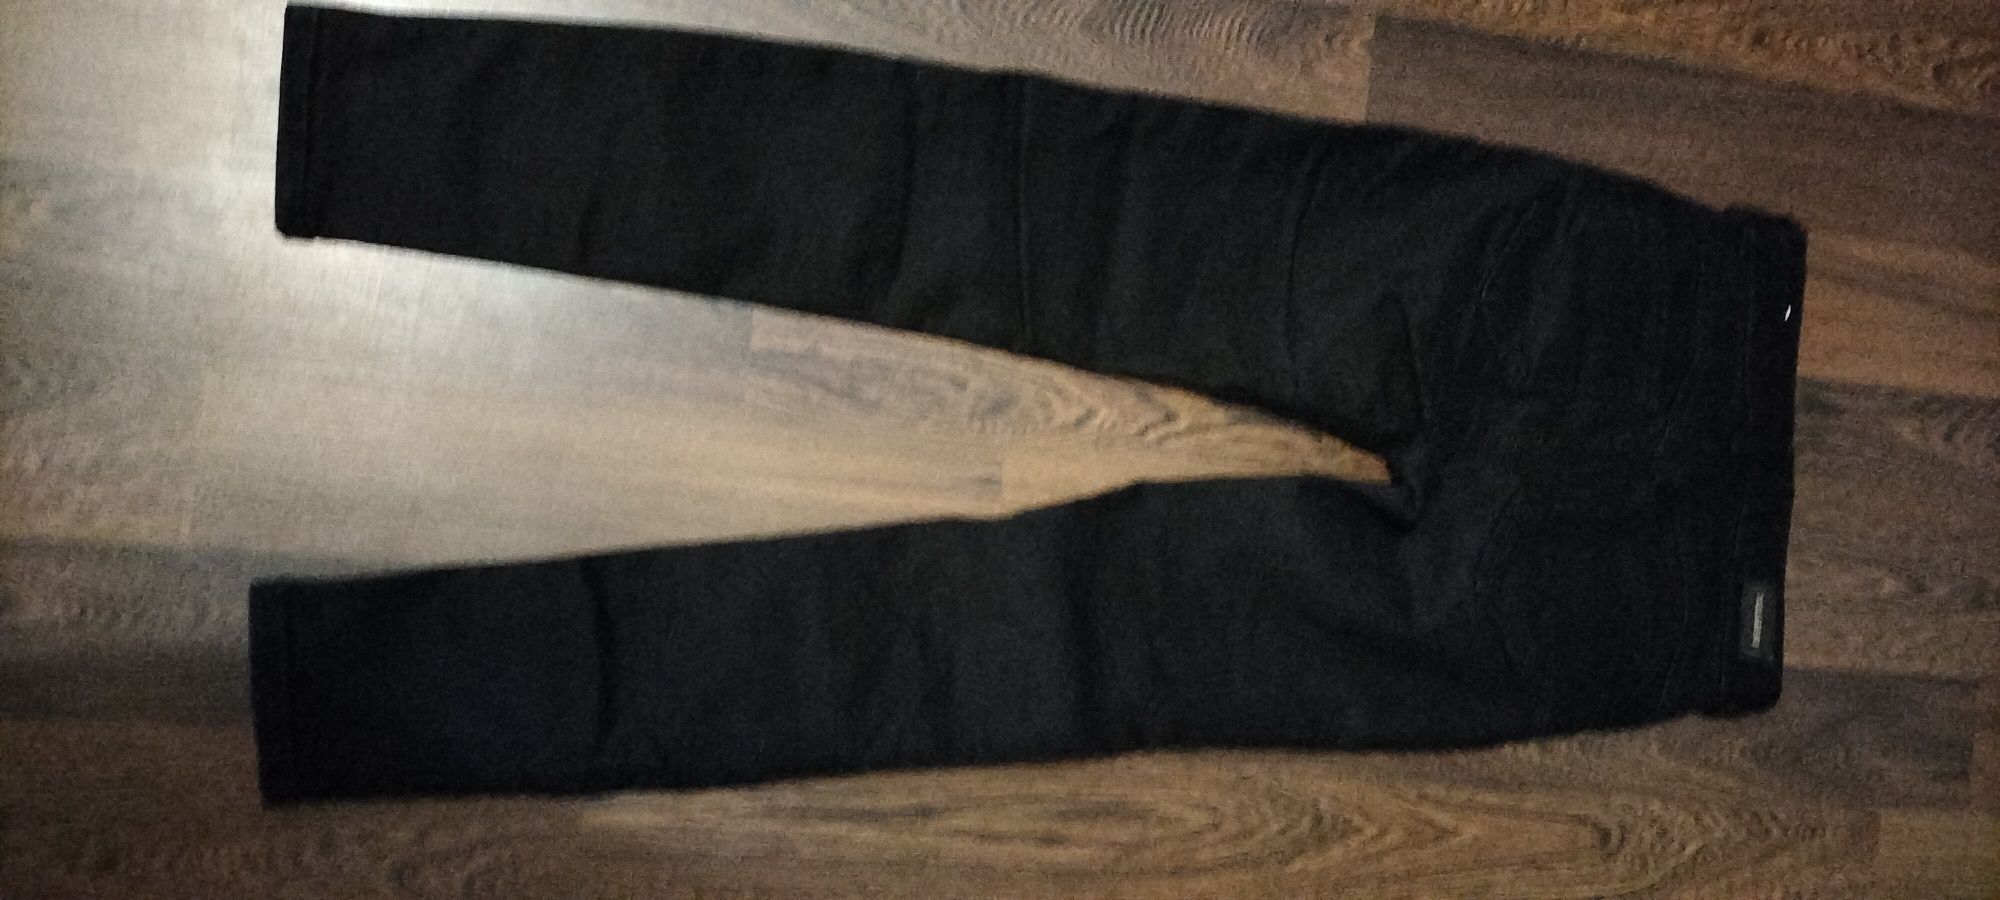 Spodnie czarne damskie nowe r. 36 Pull&Bear